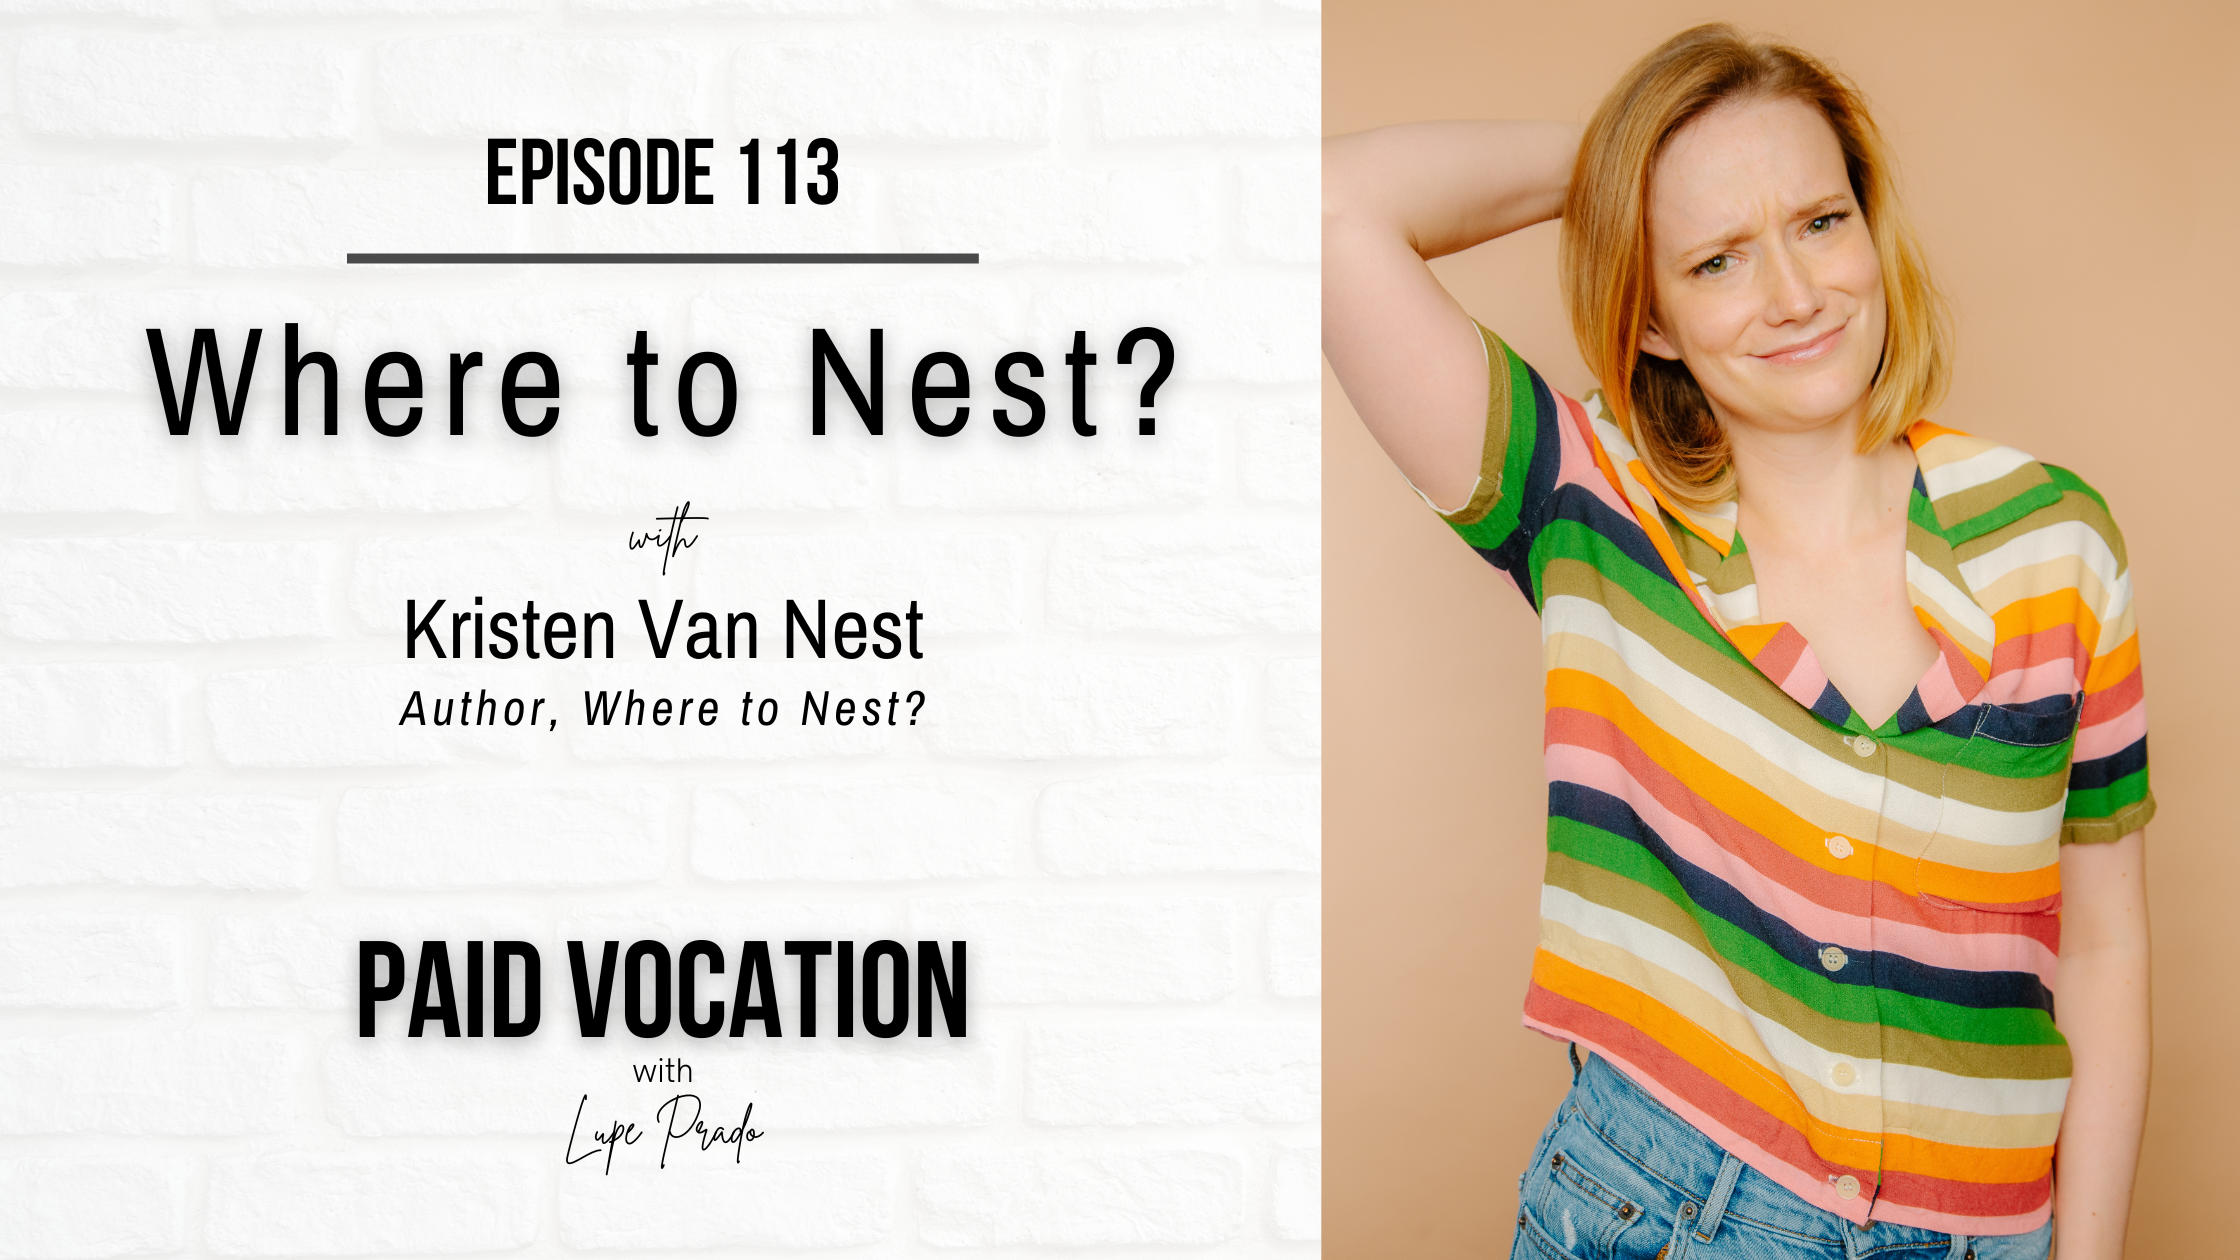 Where to Nest? with Kristen Van Nest